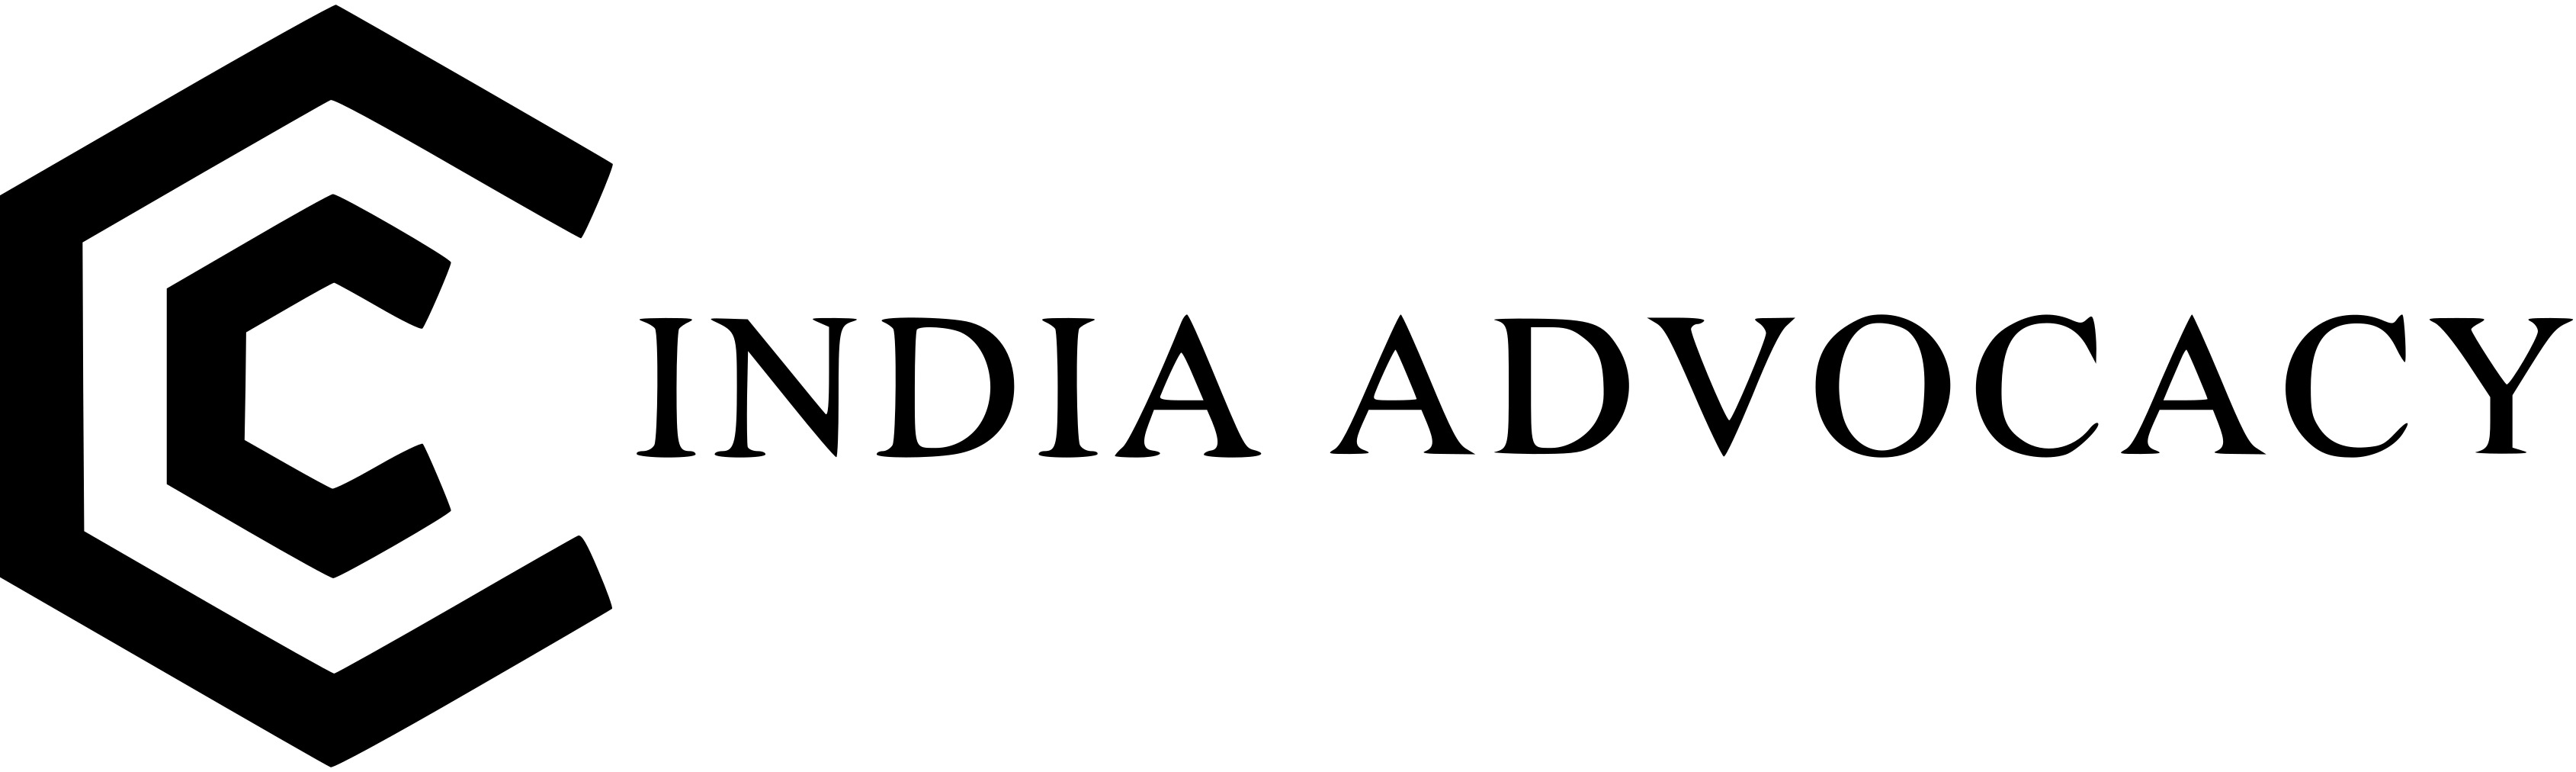 India Advocacy Logo